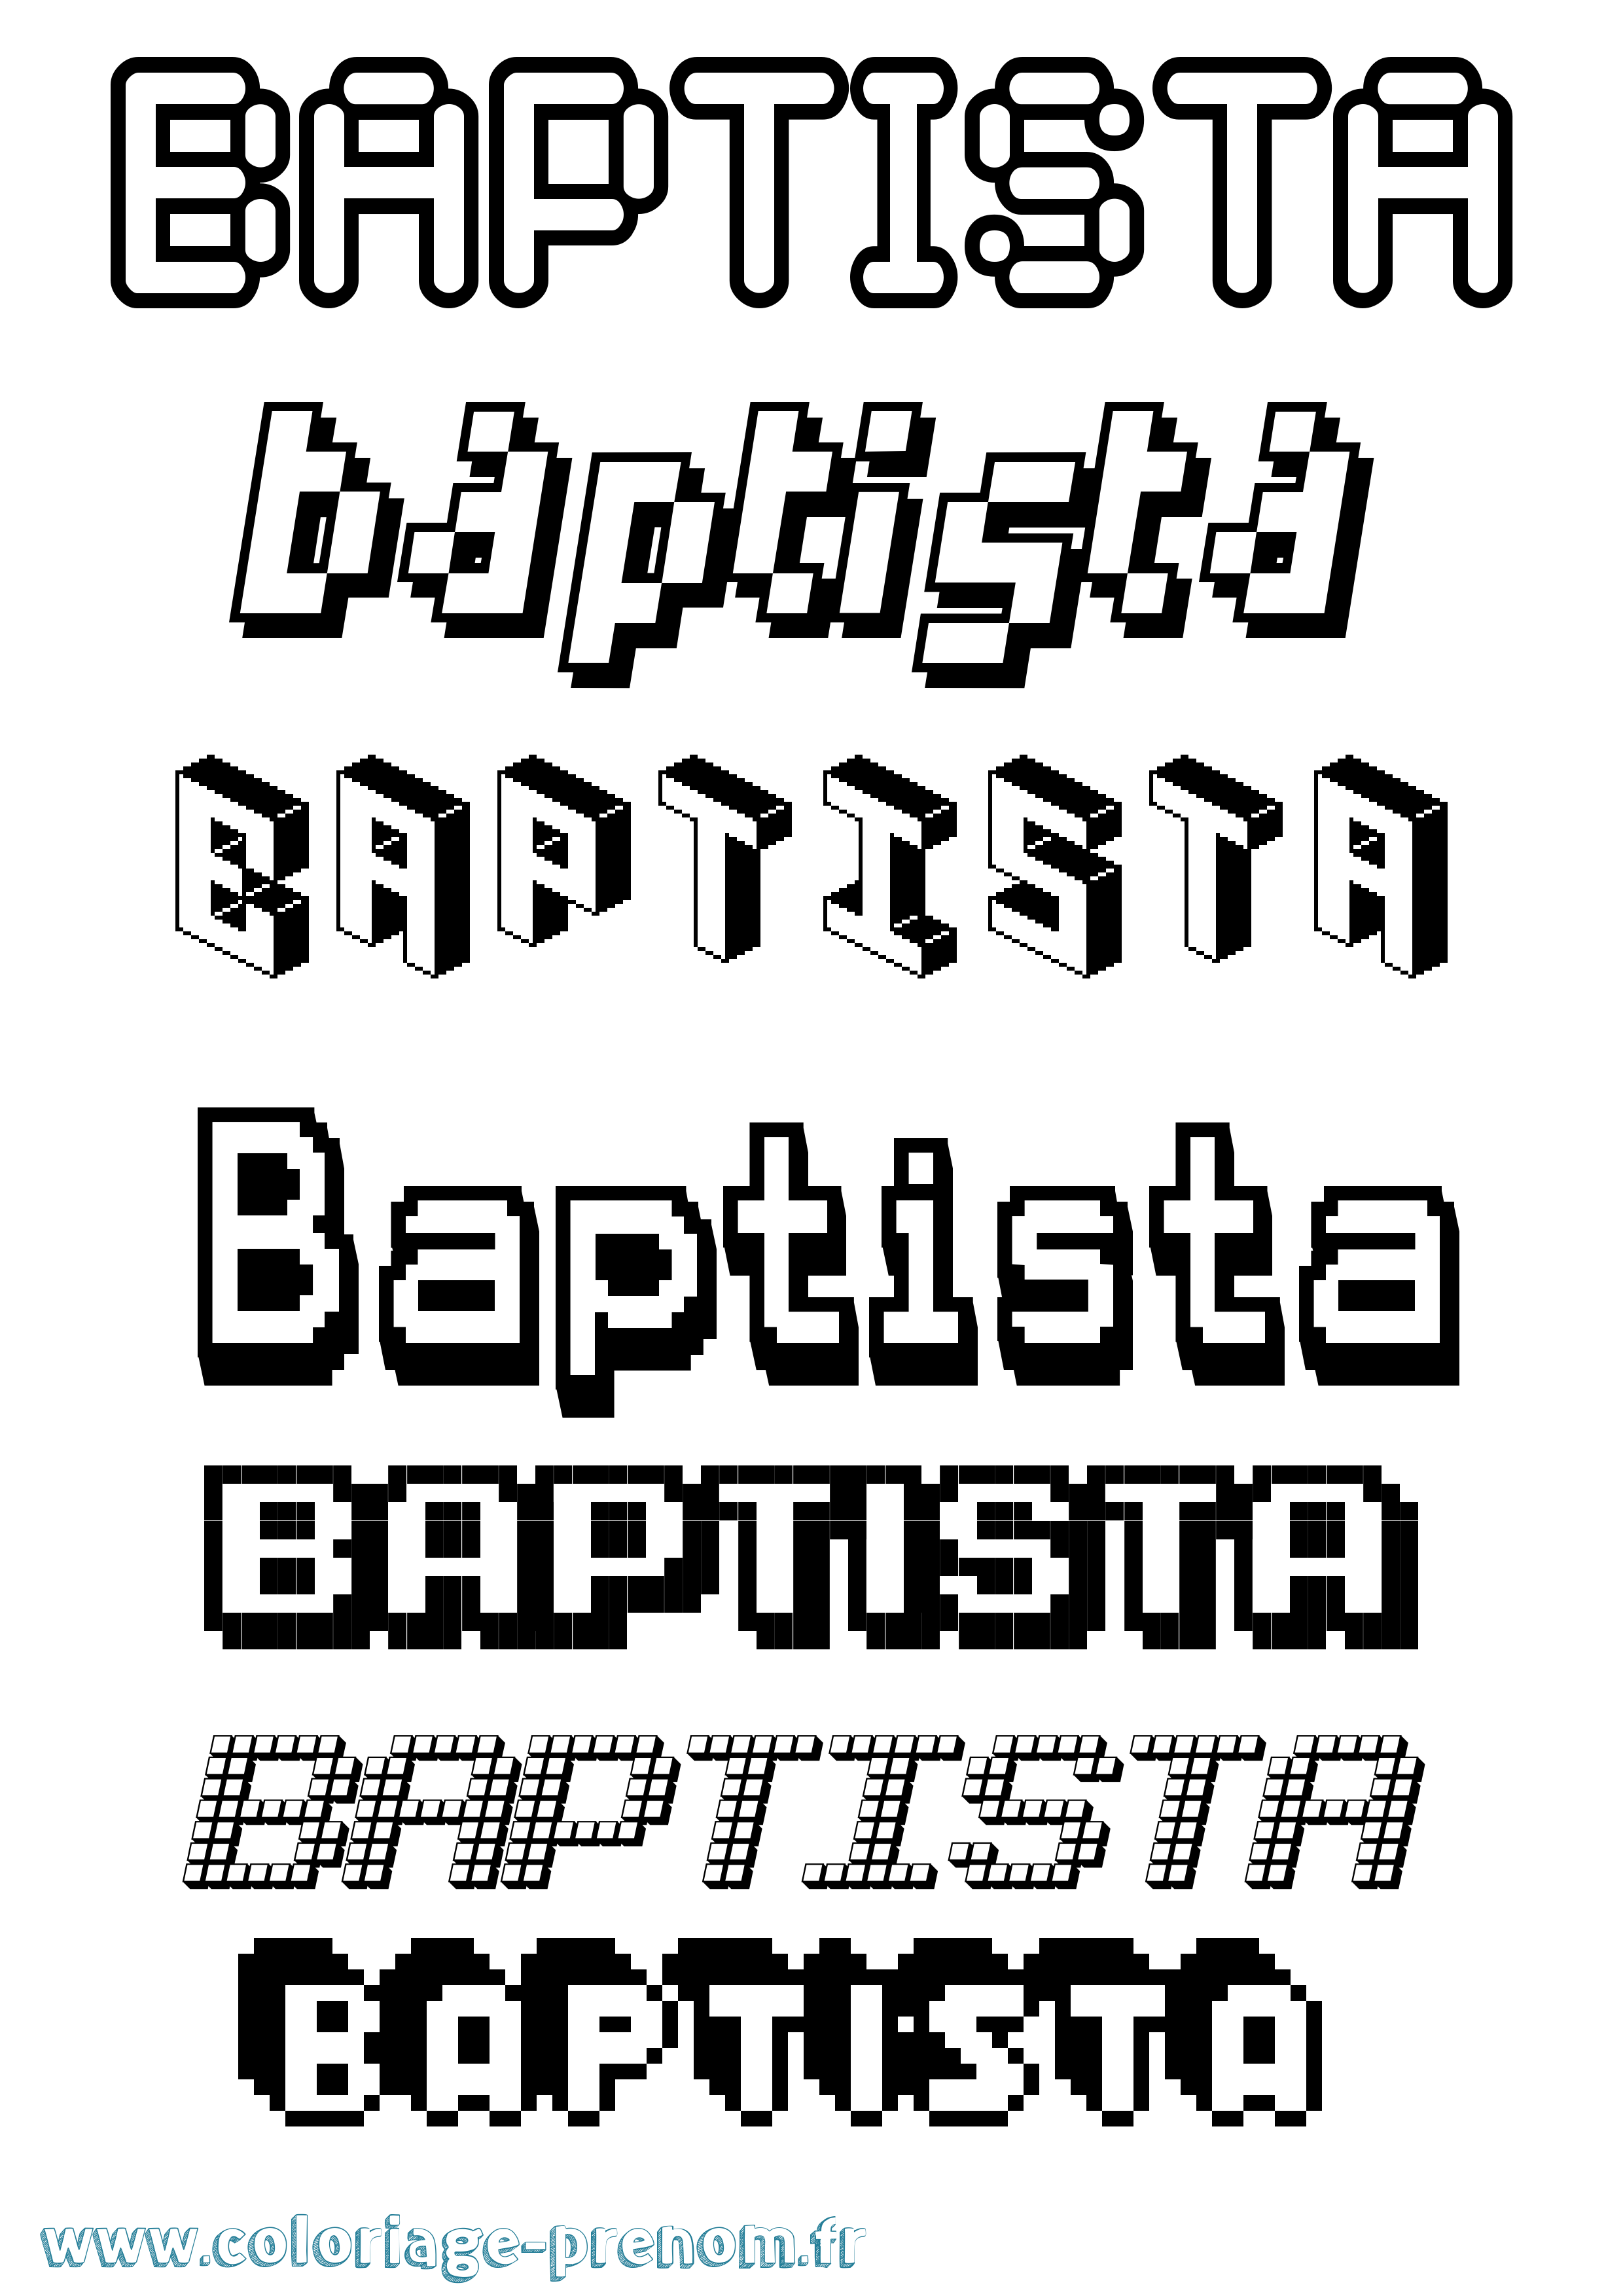 Coloriage prénom Baptista Pixel